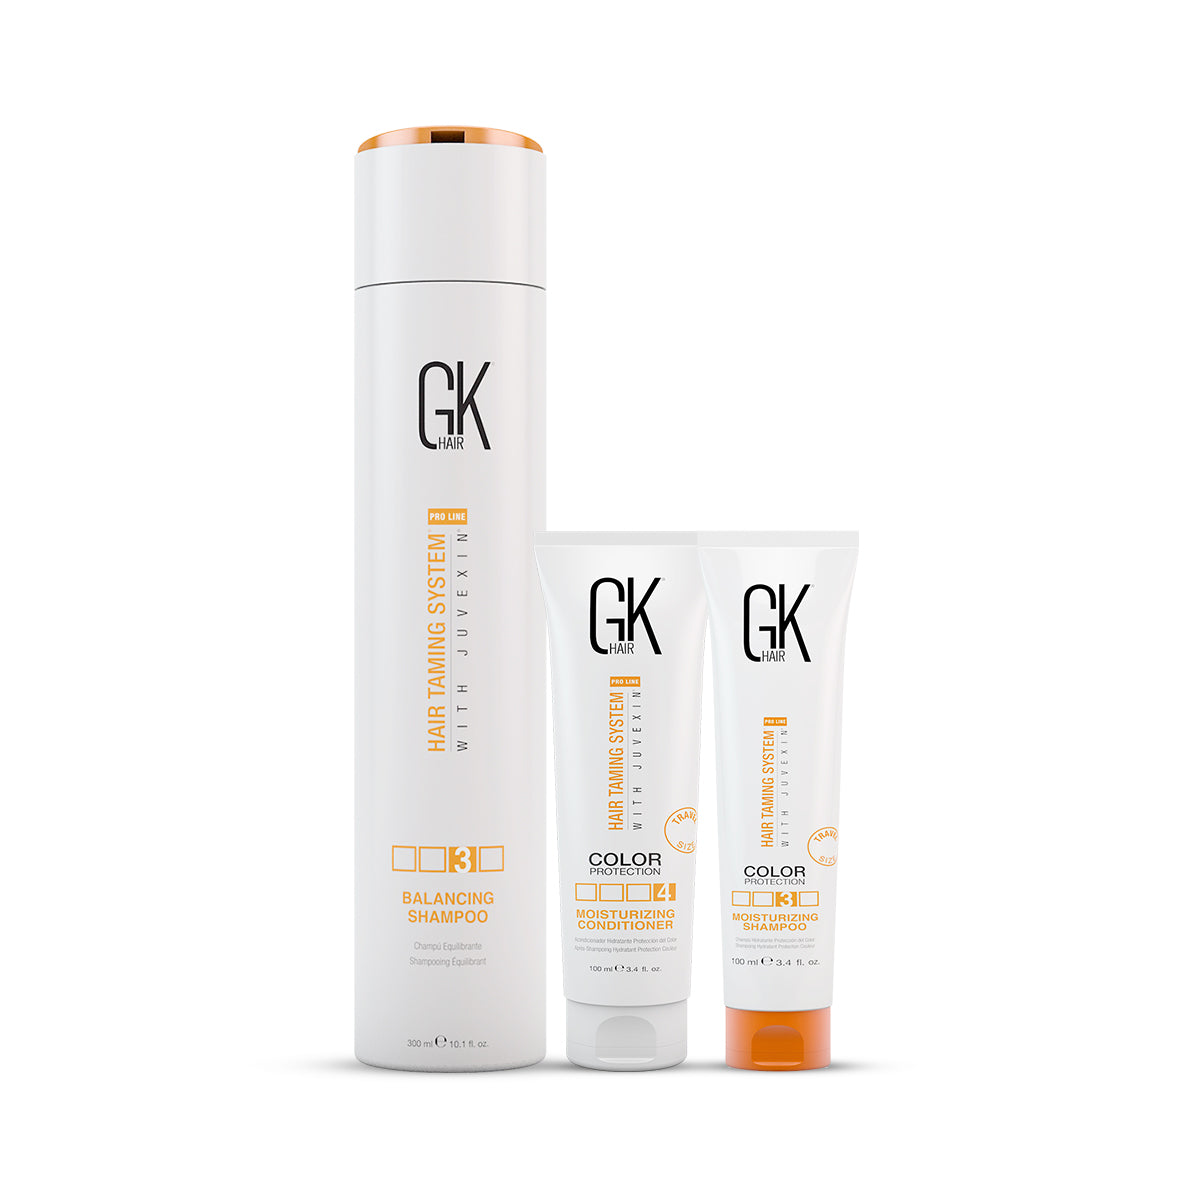 GK Hair Moisturizing Shampoo and Conditioner 100 Ml with Balancing Shampoo 300 Ml